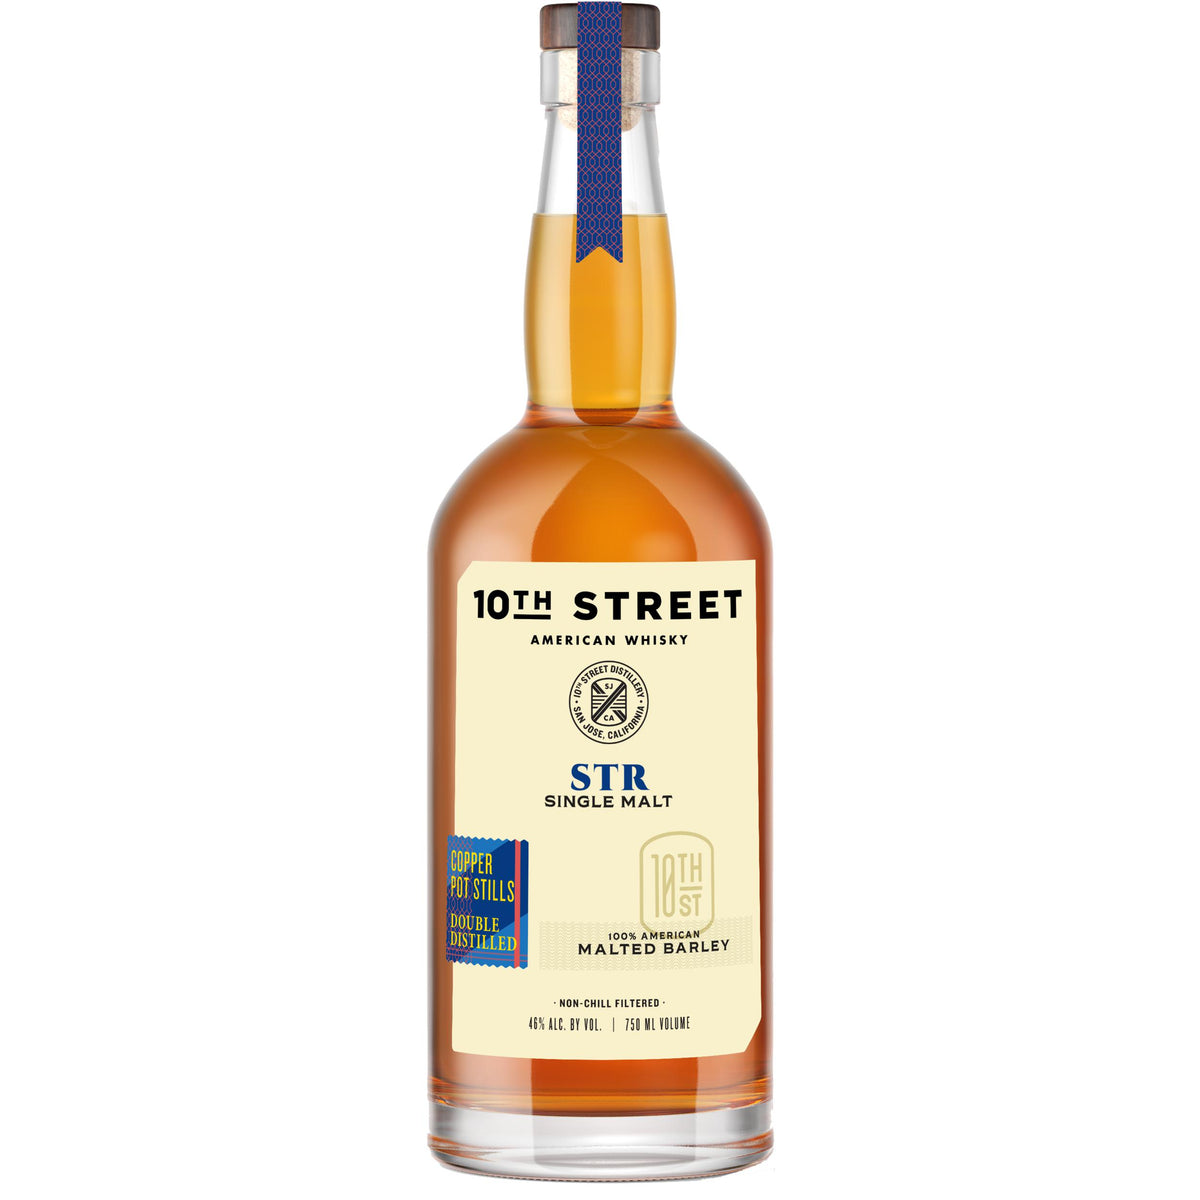 10th Street STR Single Malt American Whisky